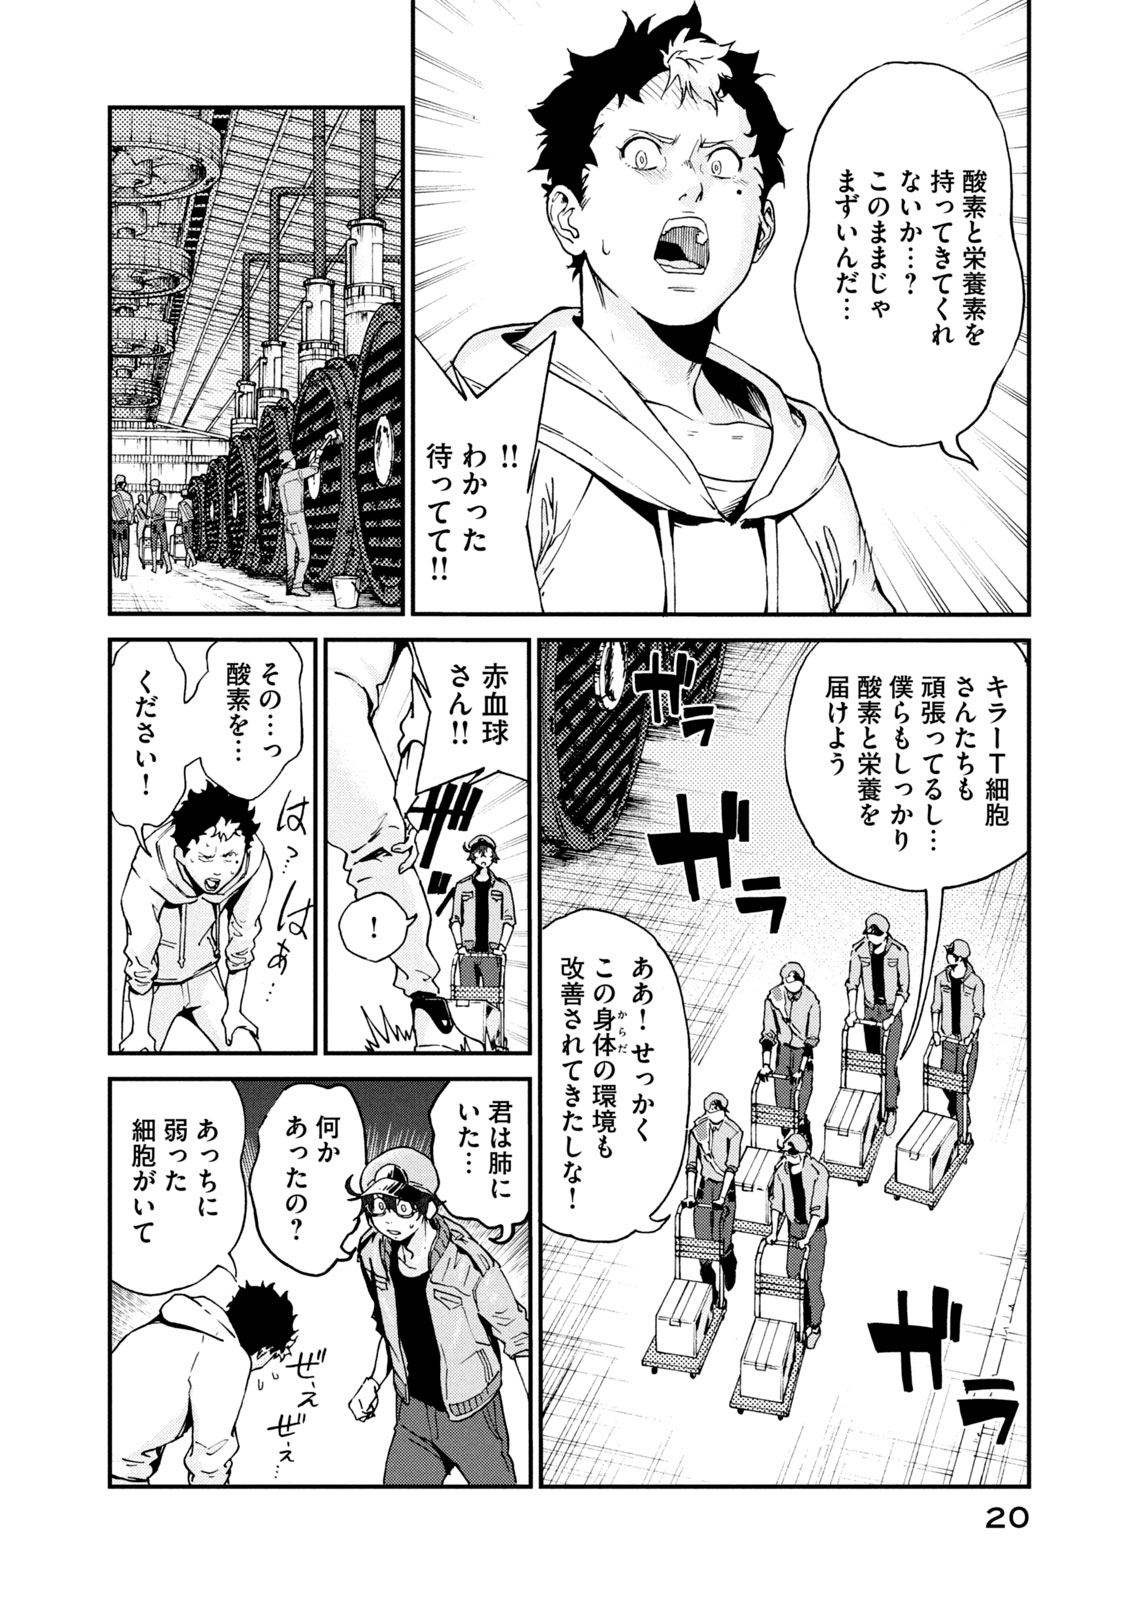 Hataraku Saibou BLACK - Chapter 37 - Page 22